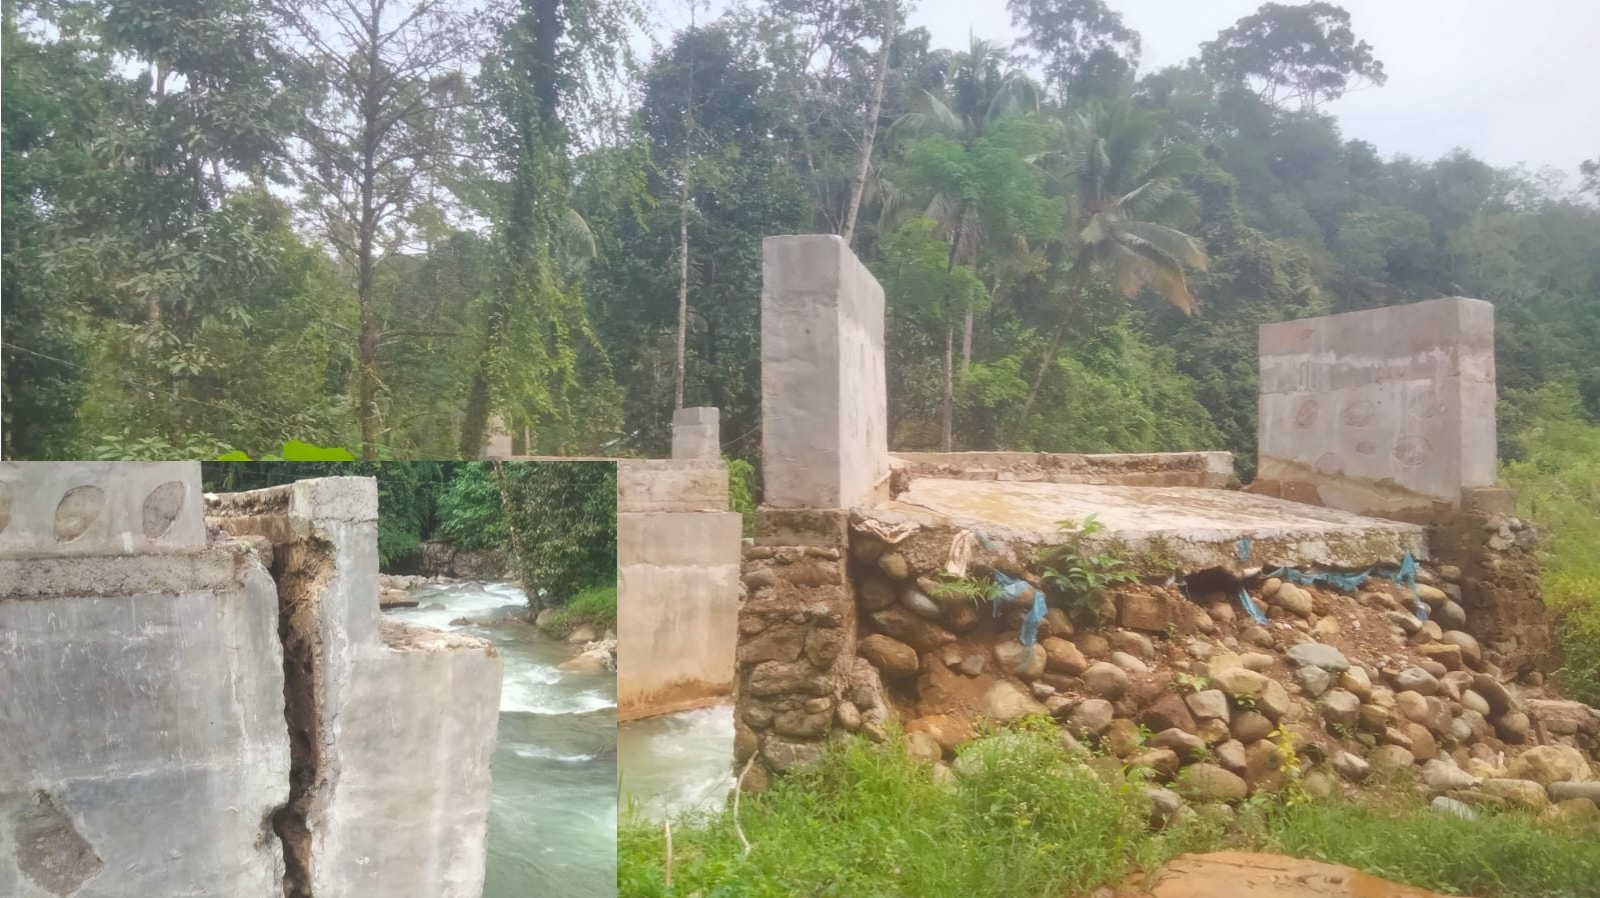 Pembangunan Jembatan Penghubung Desa Aek Baru Jae - Desa Lubuk Samboa mangkrak, dan abudmen jembatan juga terbelah dua, fhoto : Istimewa.